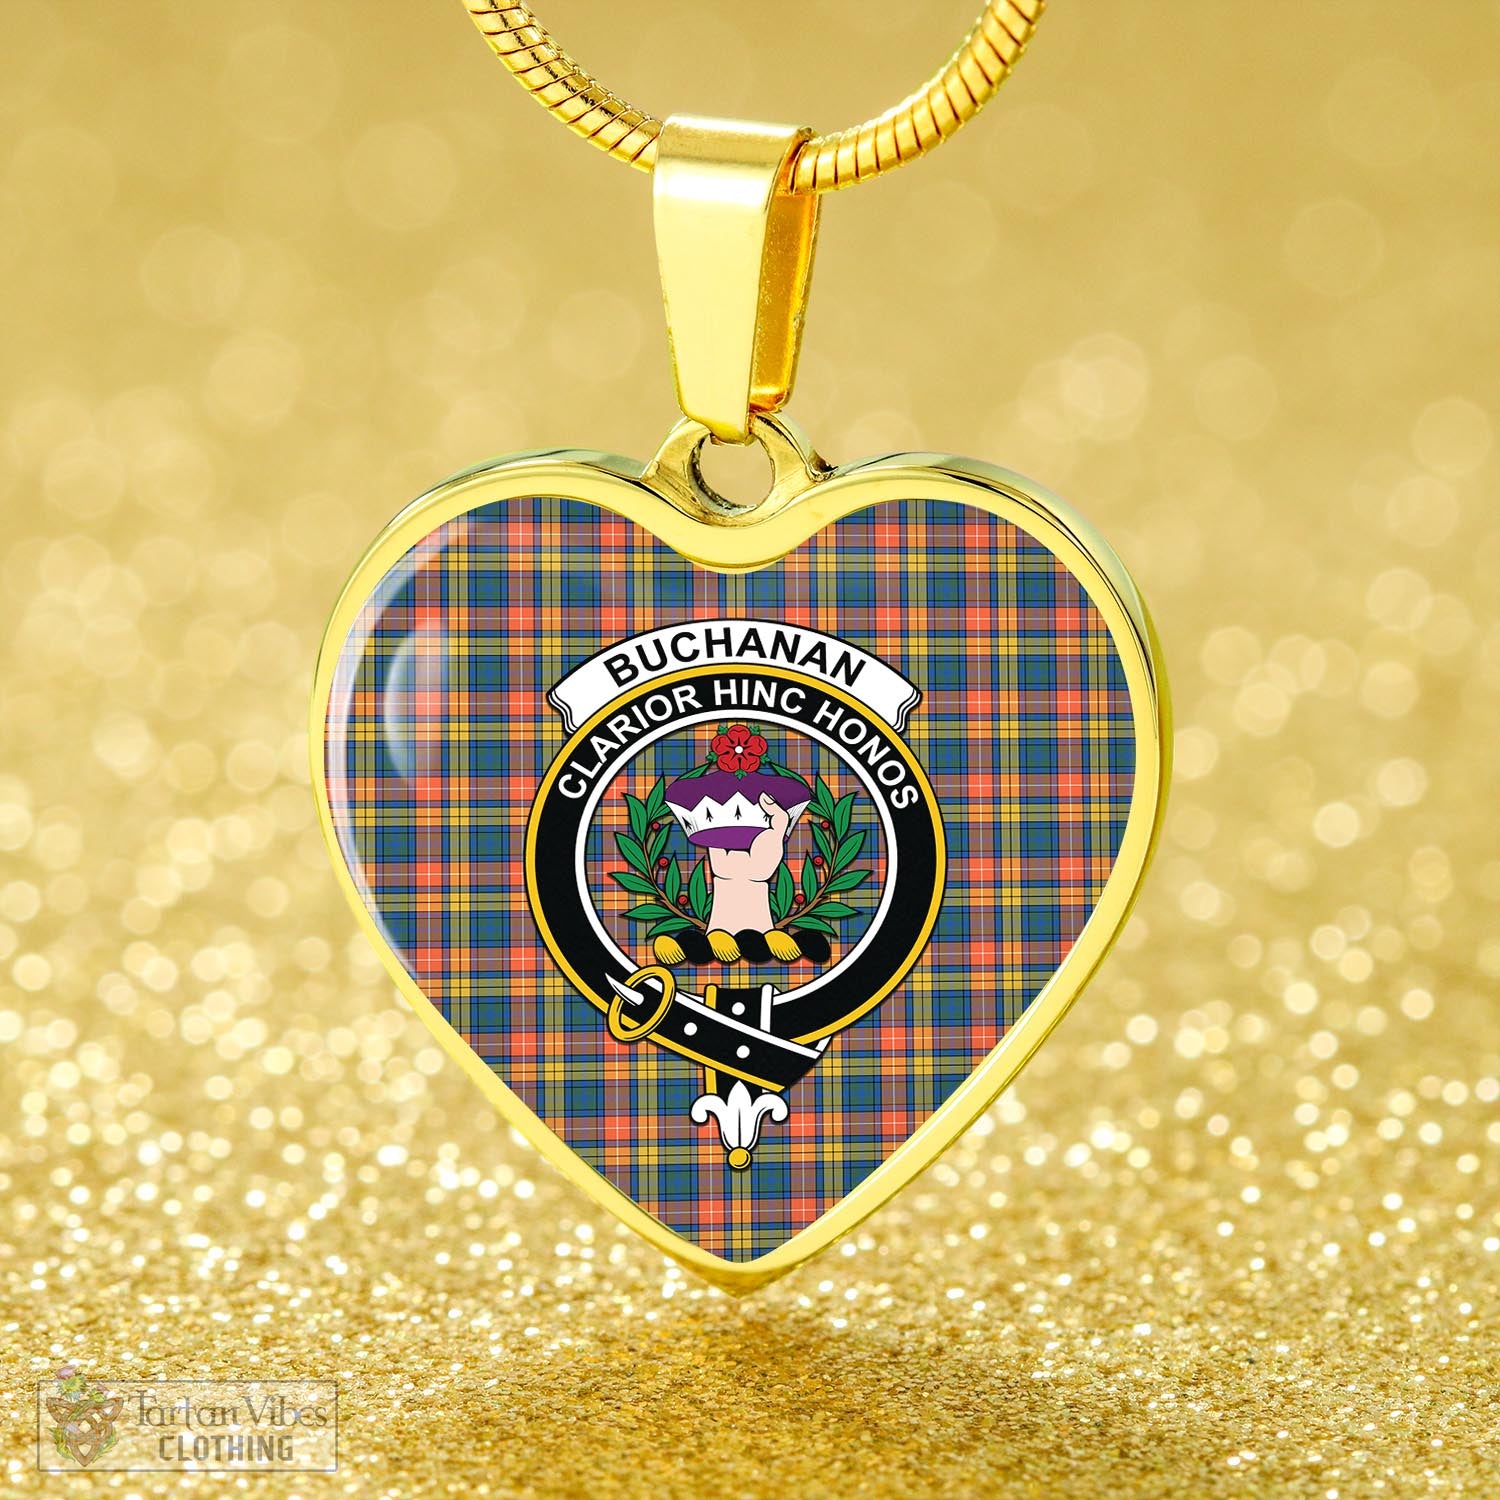 Tartan Vibes Clothing Buchanan Ancient Tartan Heart Necklace with Family Crest